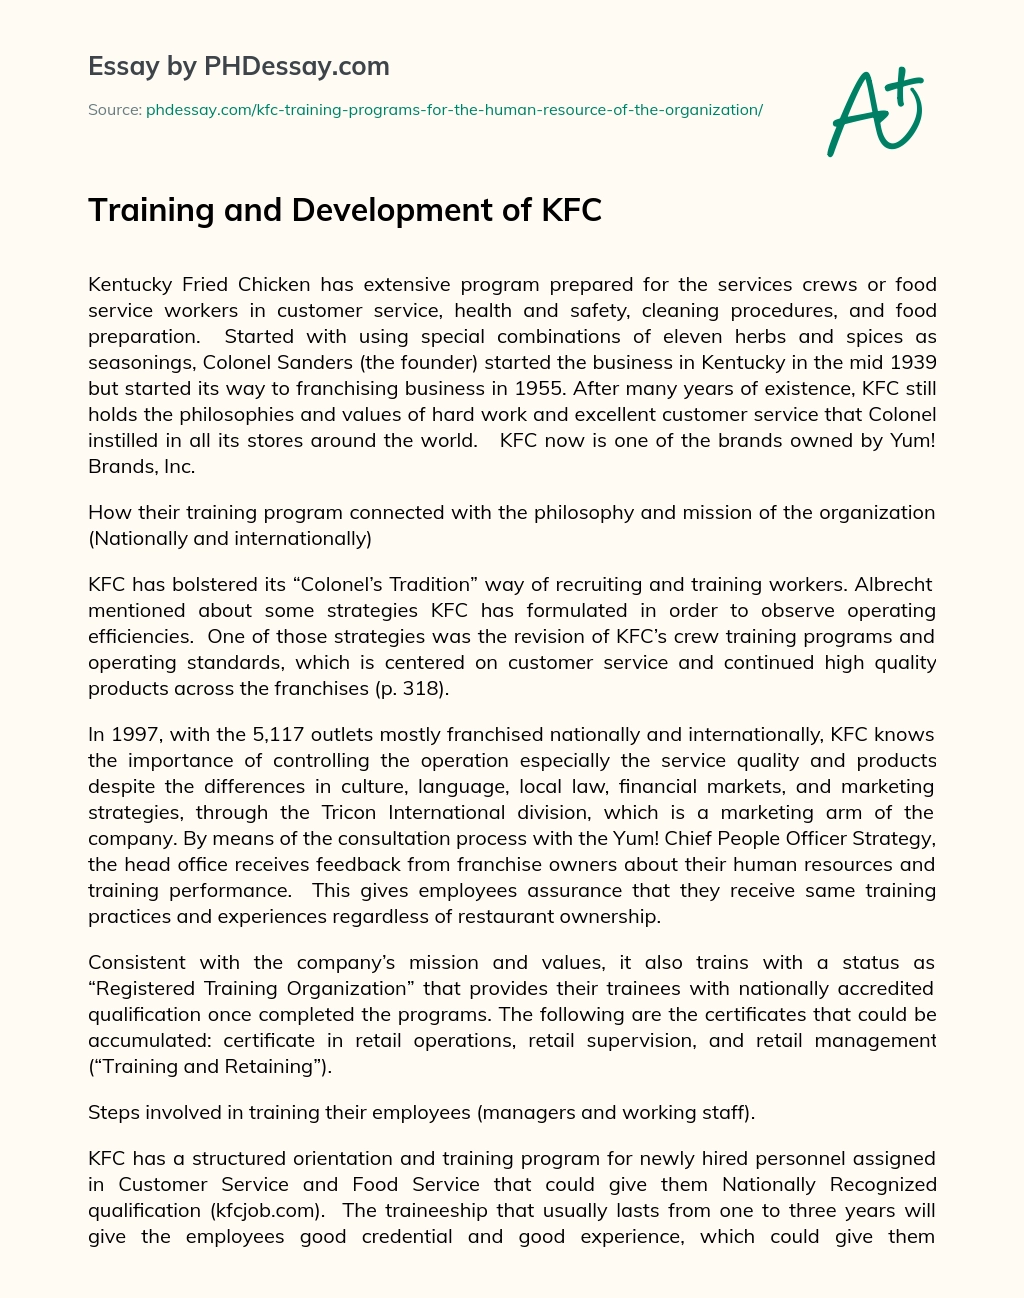 Training and Development of KFC essay